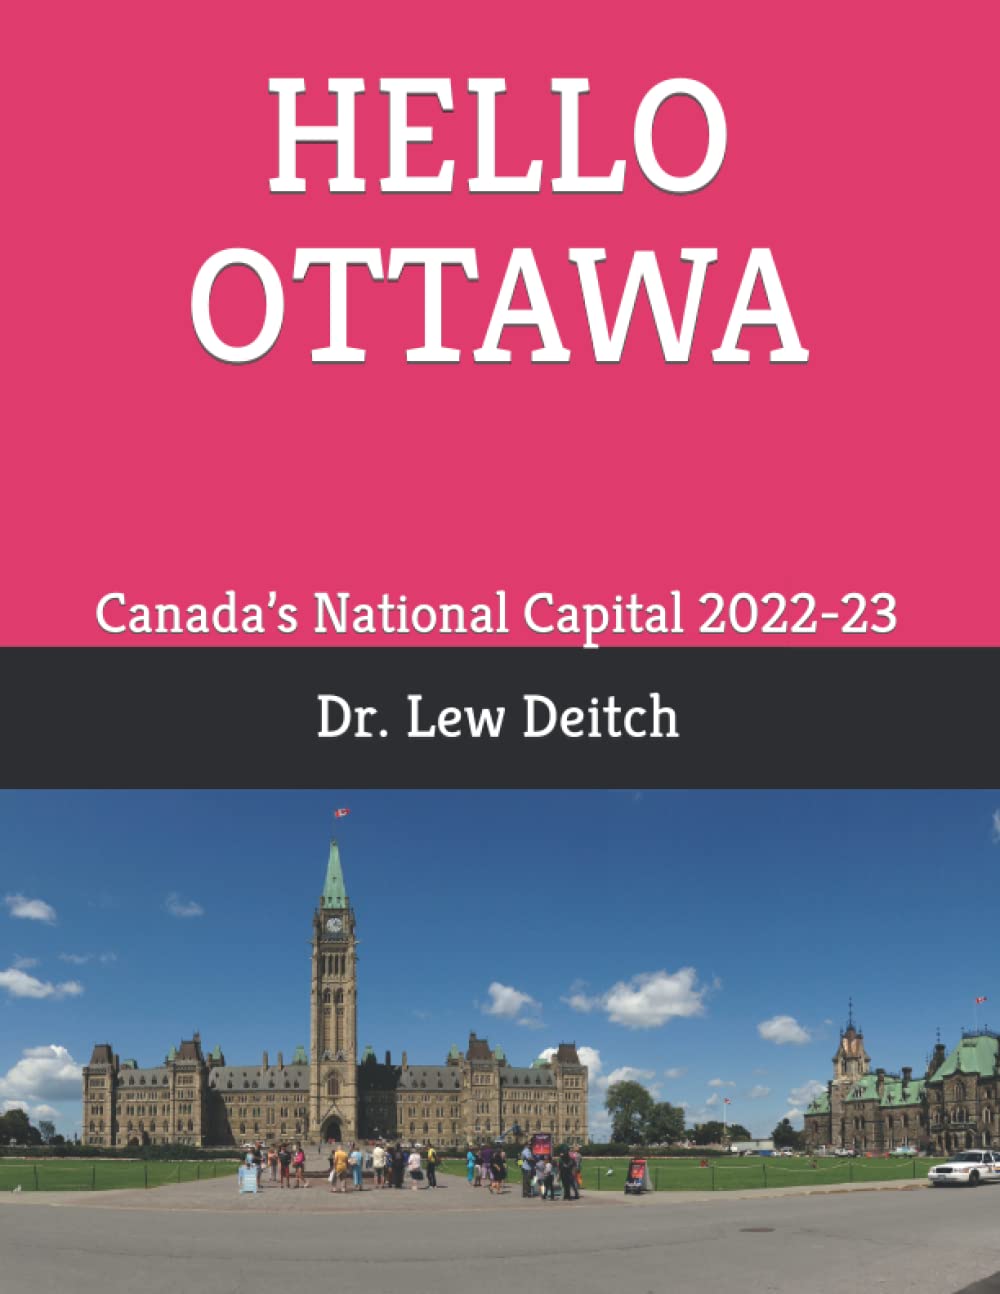 HELLO OTTAWA: Canada’s National Capital 2022-23